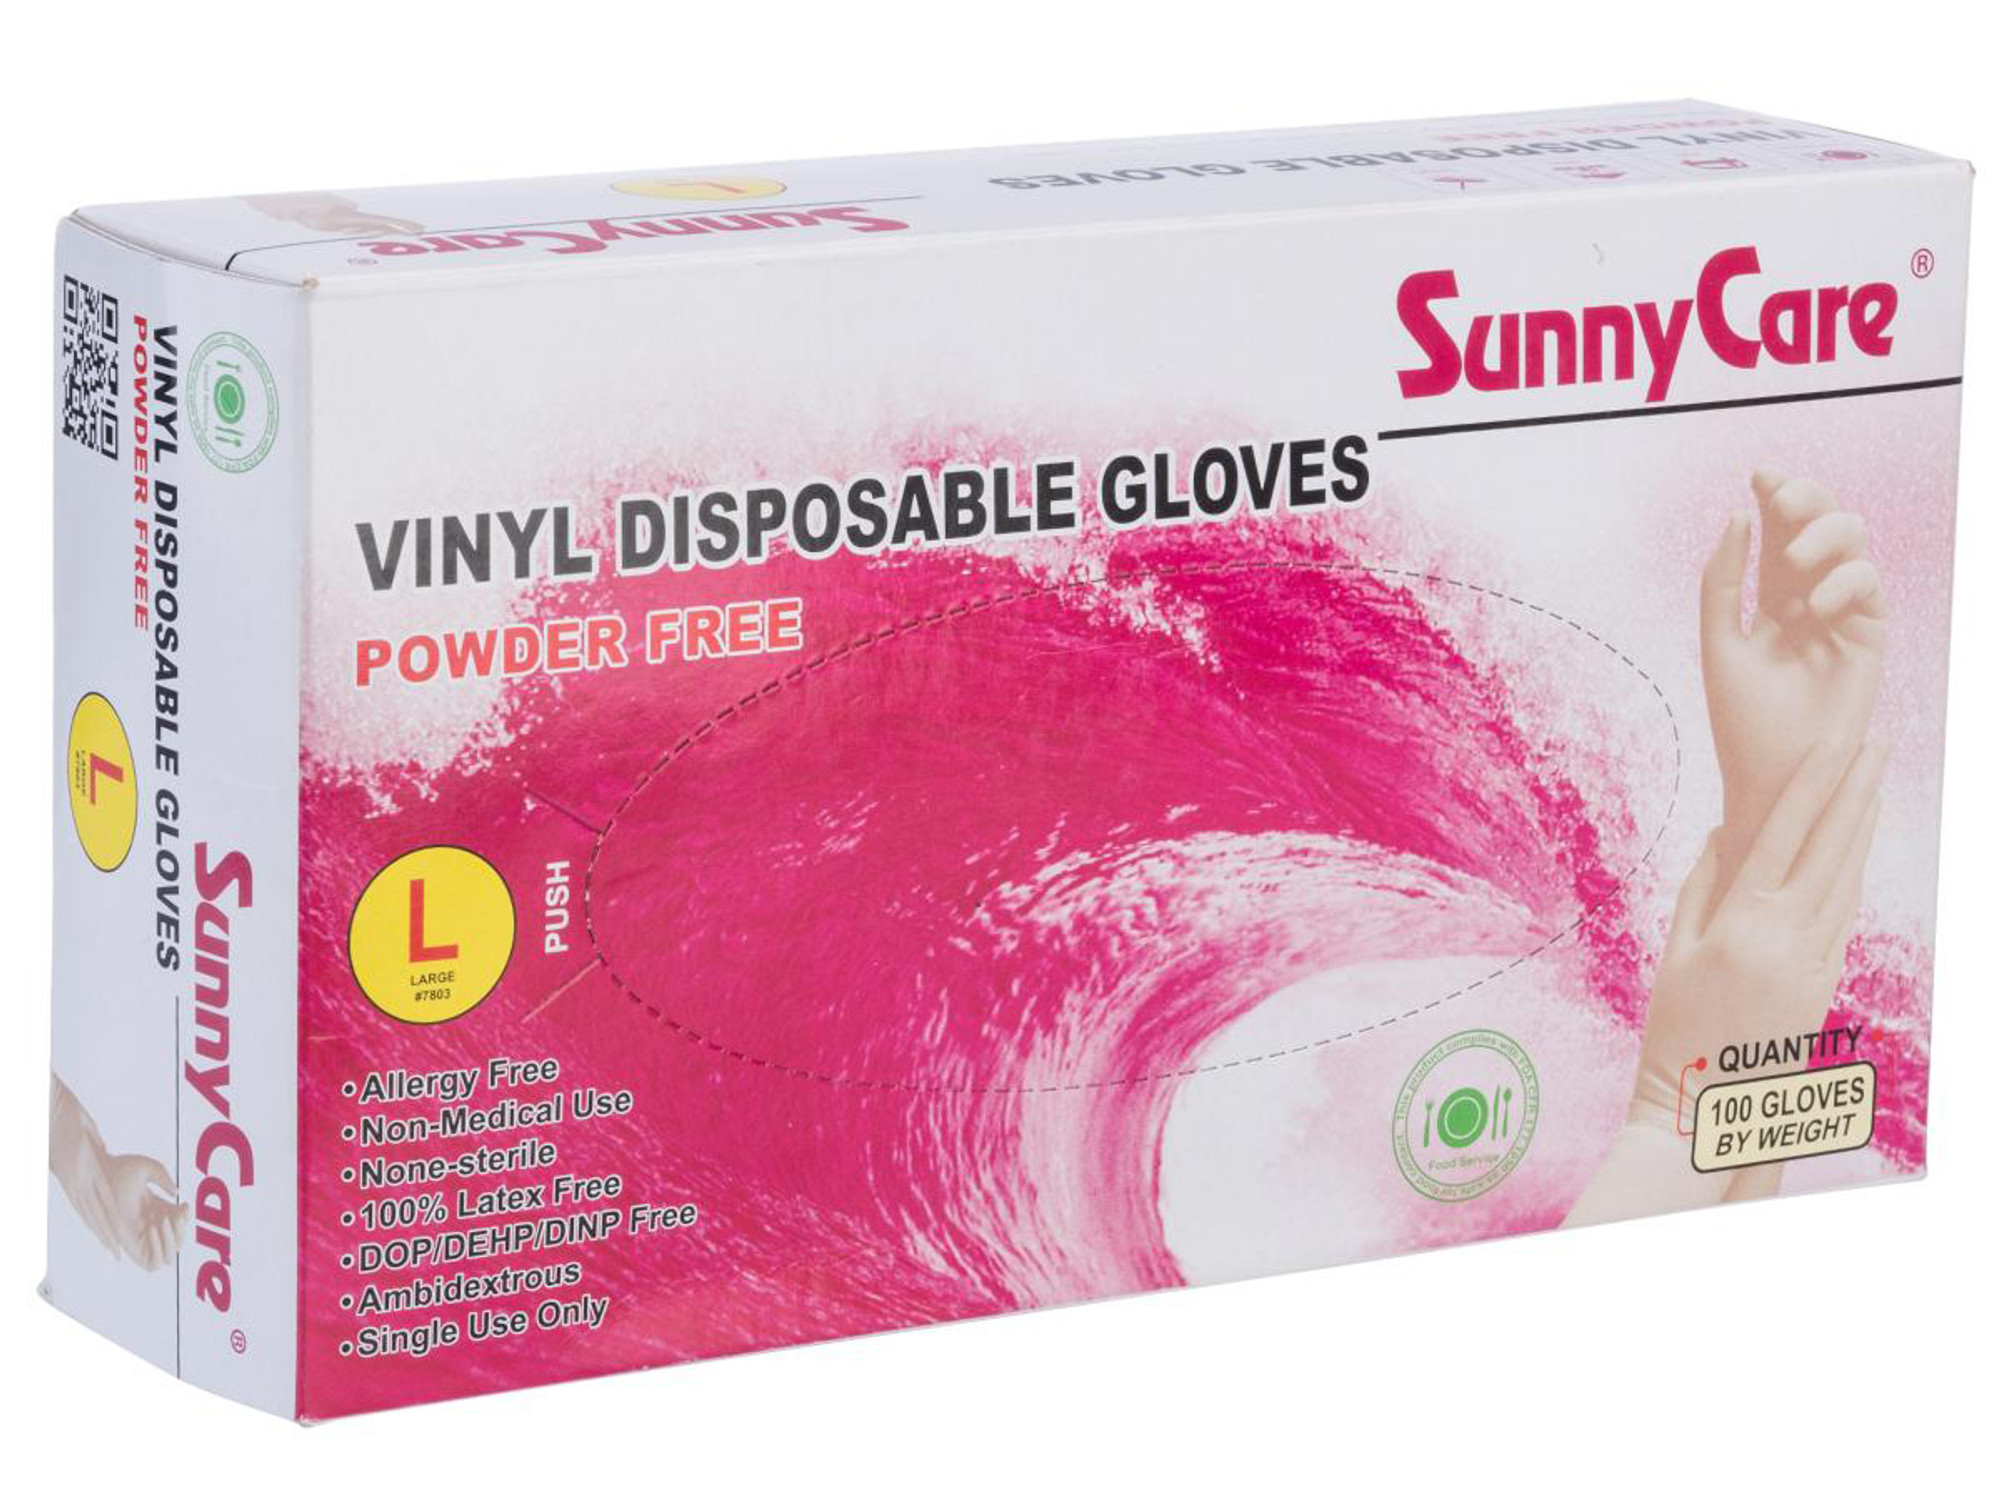 SunnyCare Vinyl Disposable Gloves